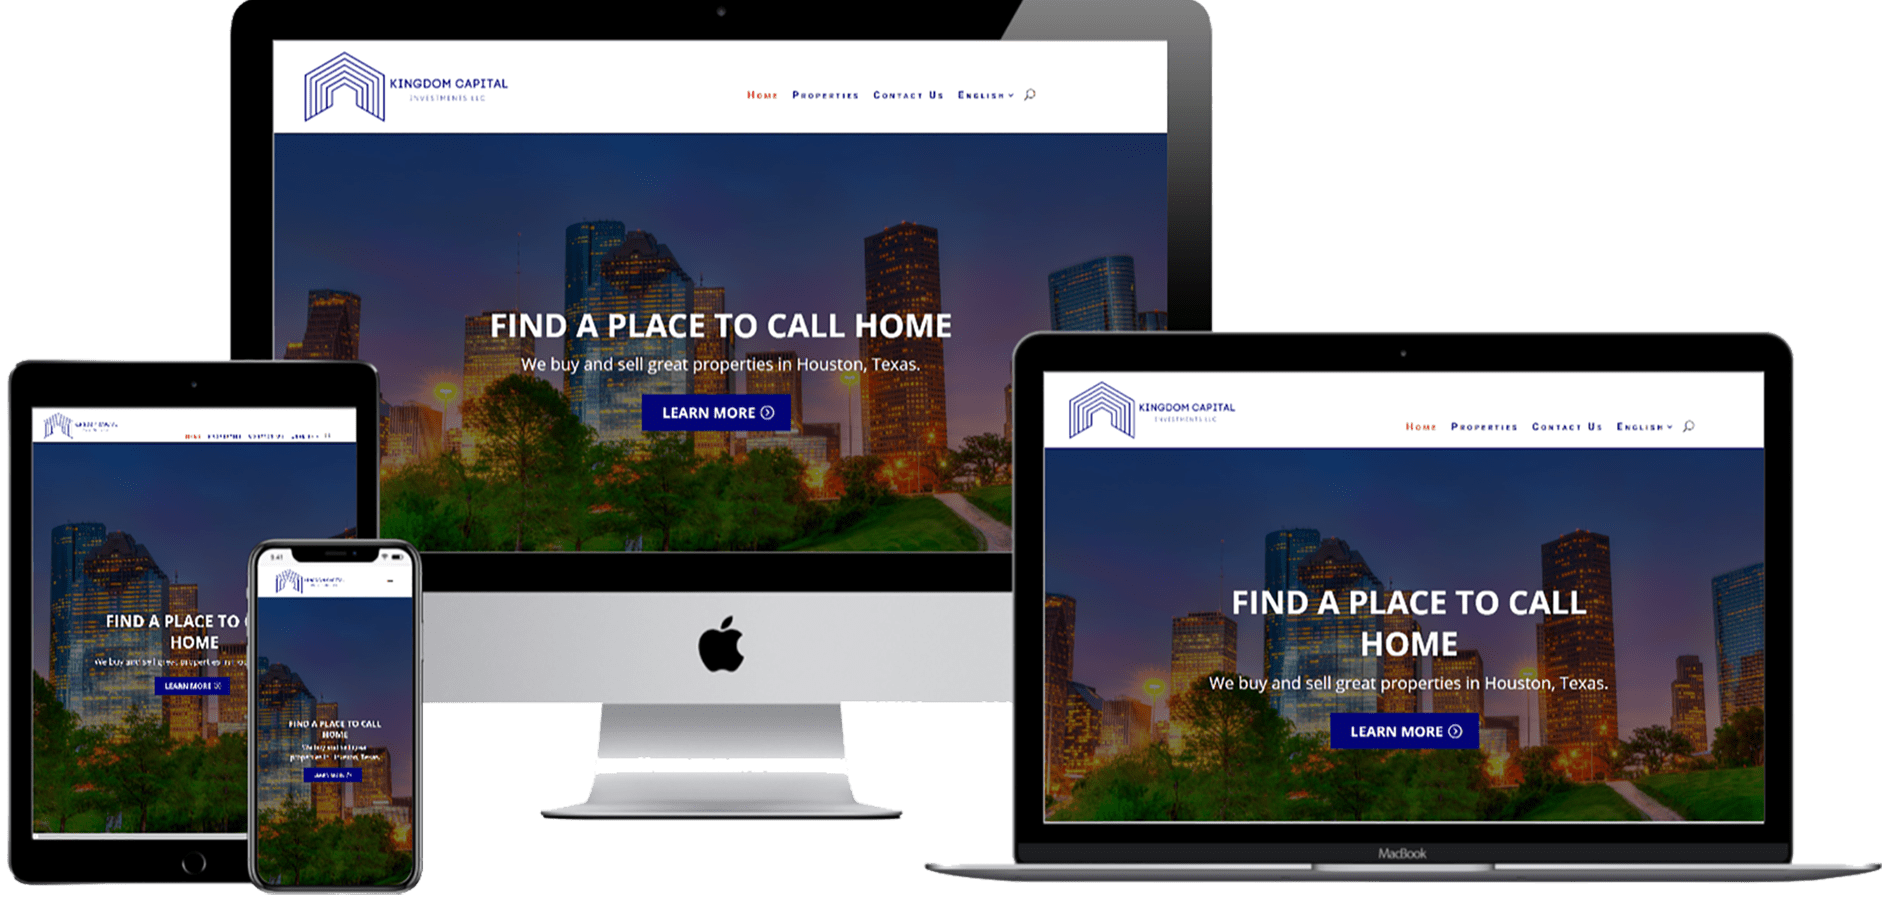 Kingdom Capital Investments Property Management Company, Houston, TX